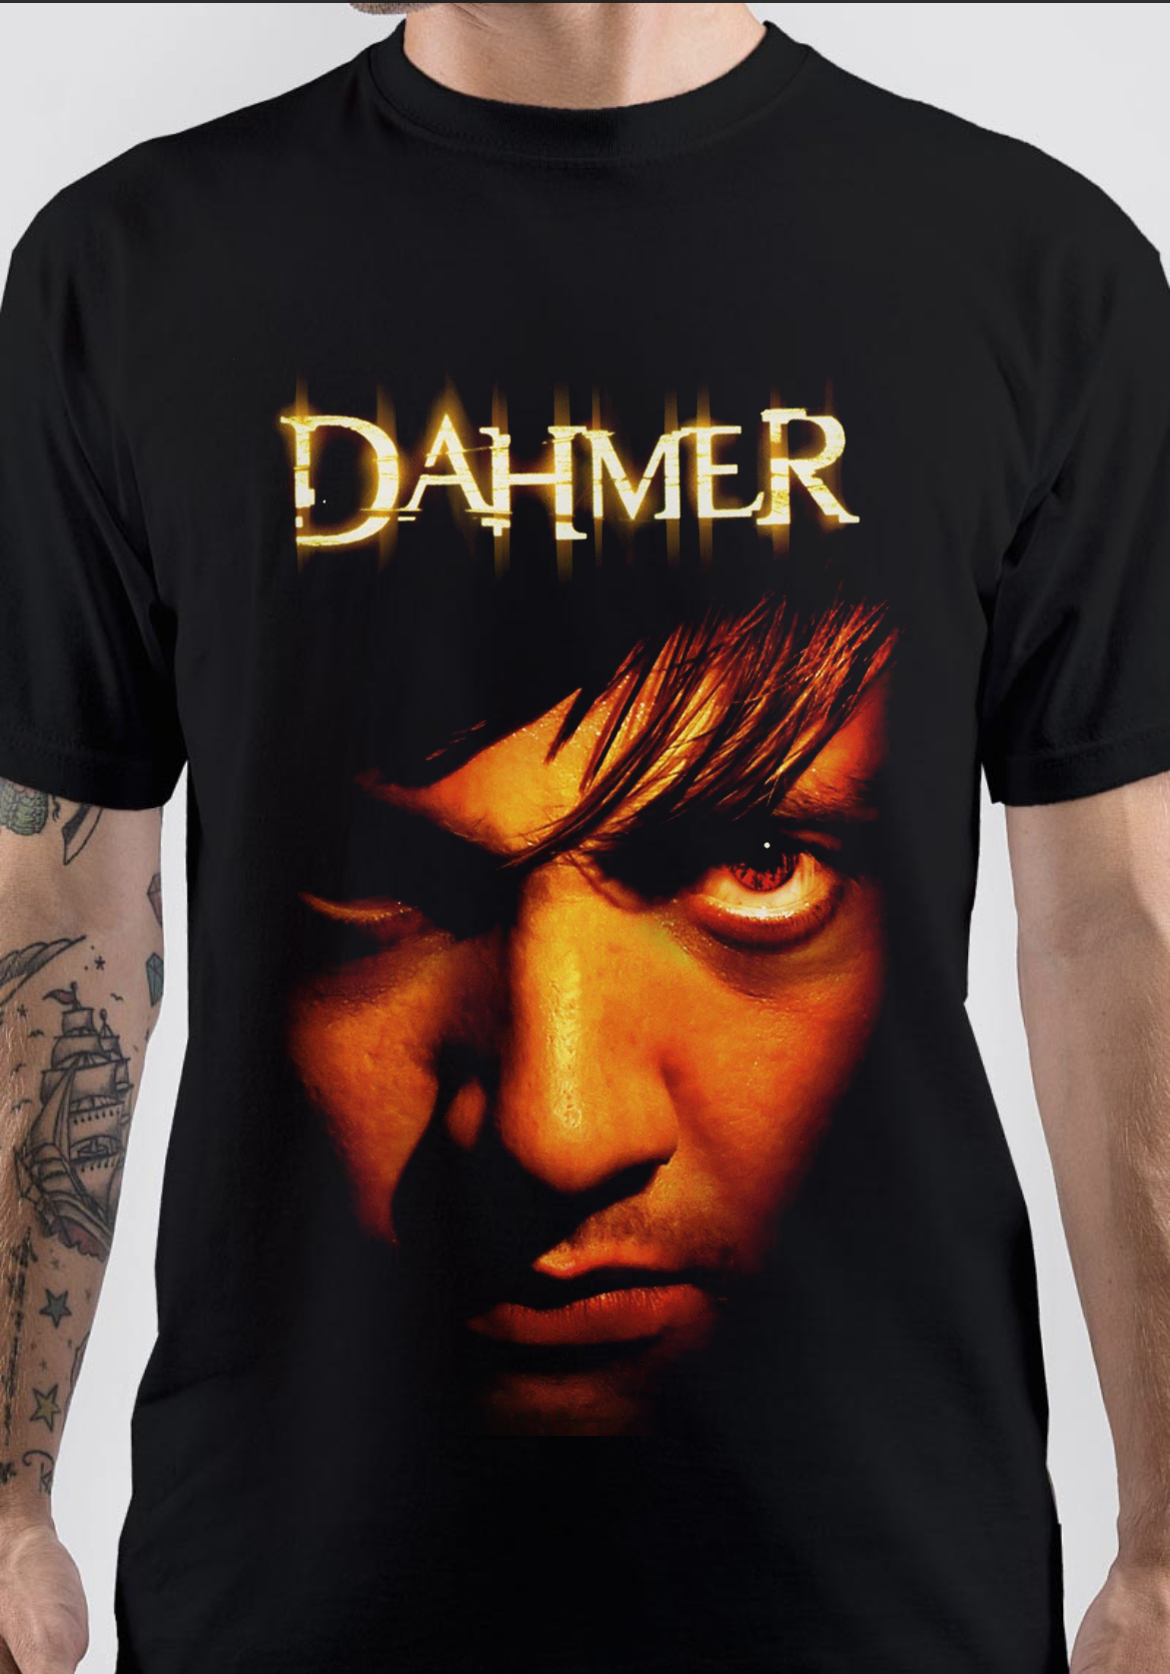 Dahmer T-Shirt And Merchandise